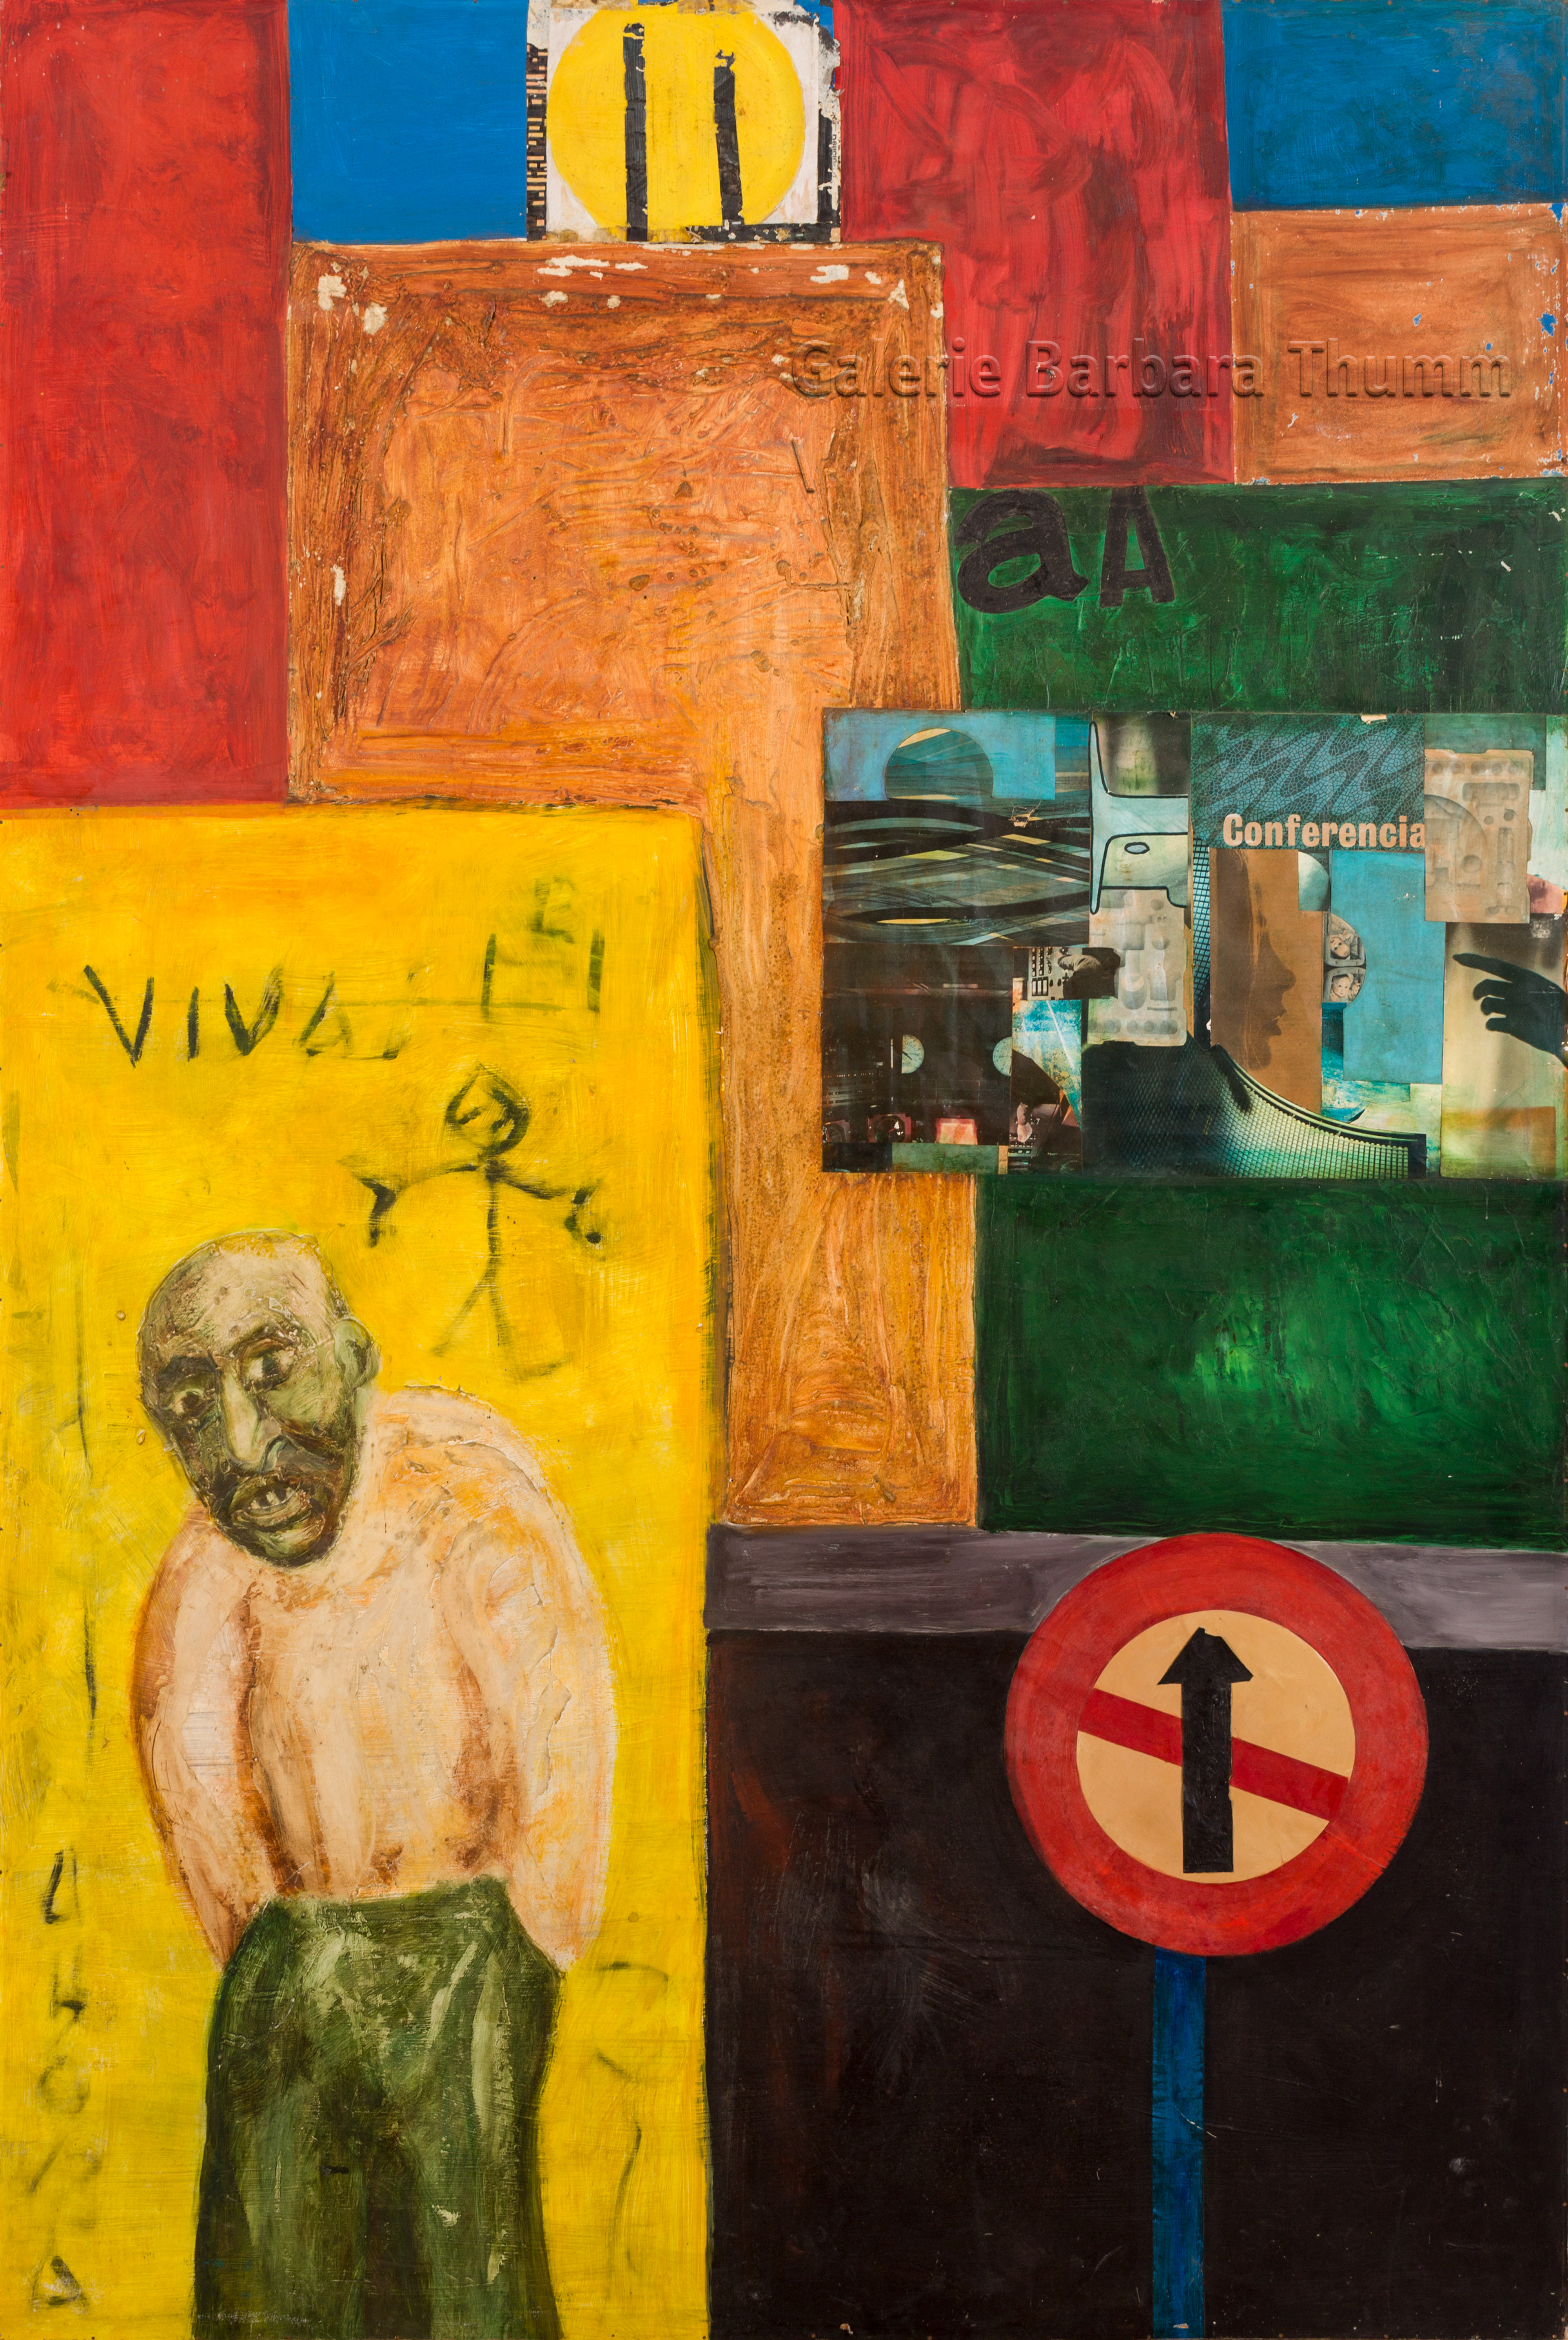 Galerie Barbara Thumm \ Teresa Burga – Untitled (Viva el … ahora) (TBu-66-010) \ Untitled (Viva el &#8230; ahora) (1966)